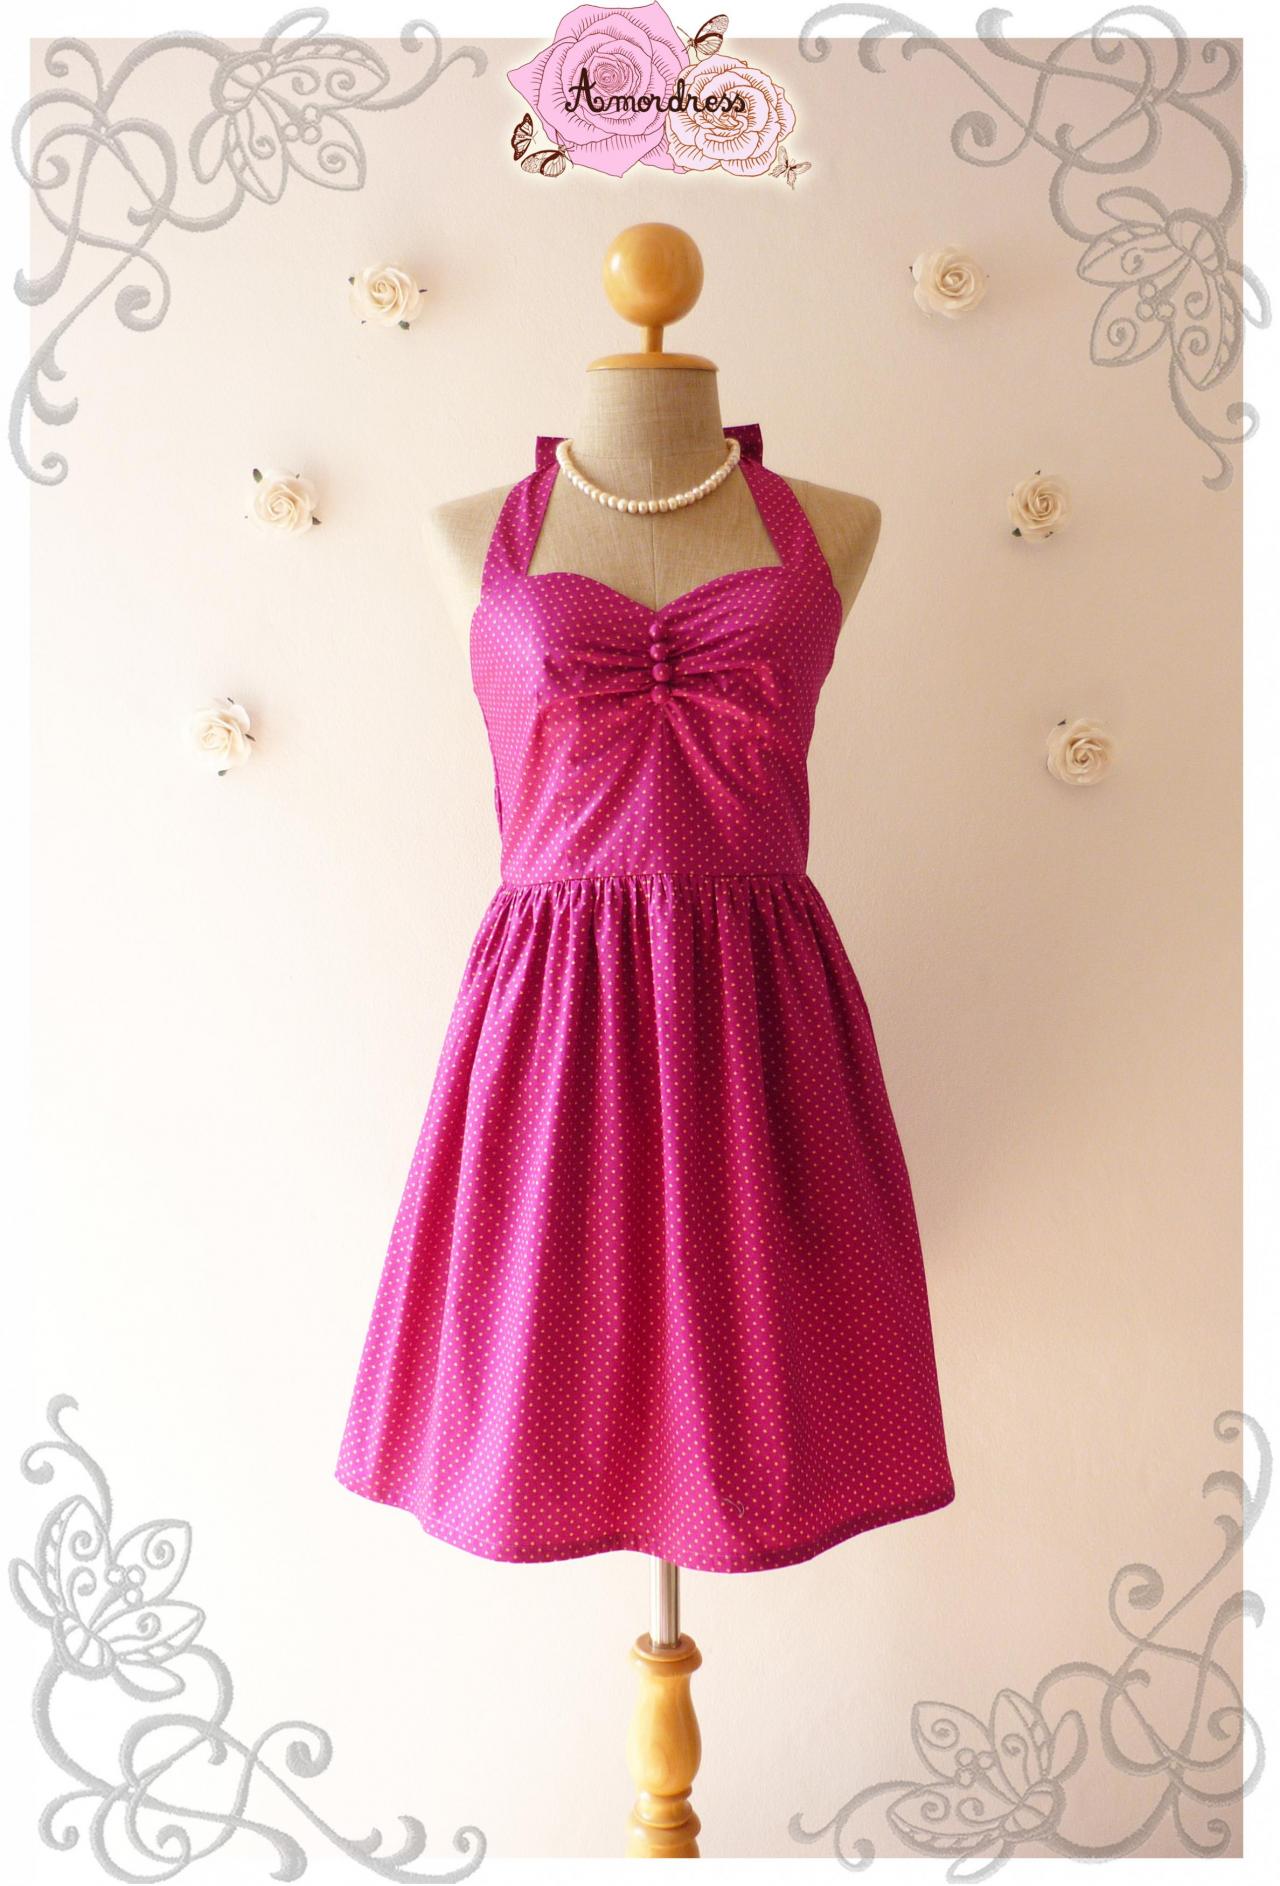 Purple Dress Vintage Style Dress Handmade Vintage Inspired Party Dress Bridesmaid Dress Rockabilly -size Xs, S, M, L, Xl-